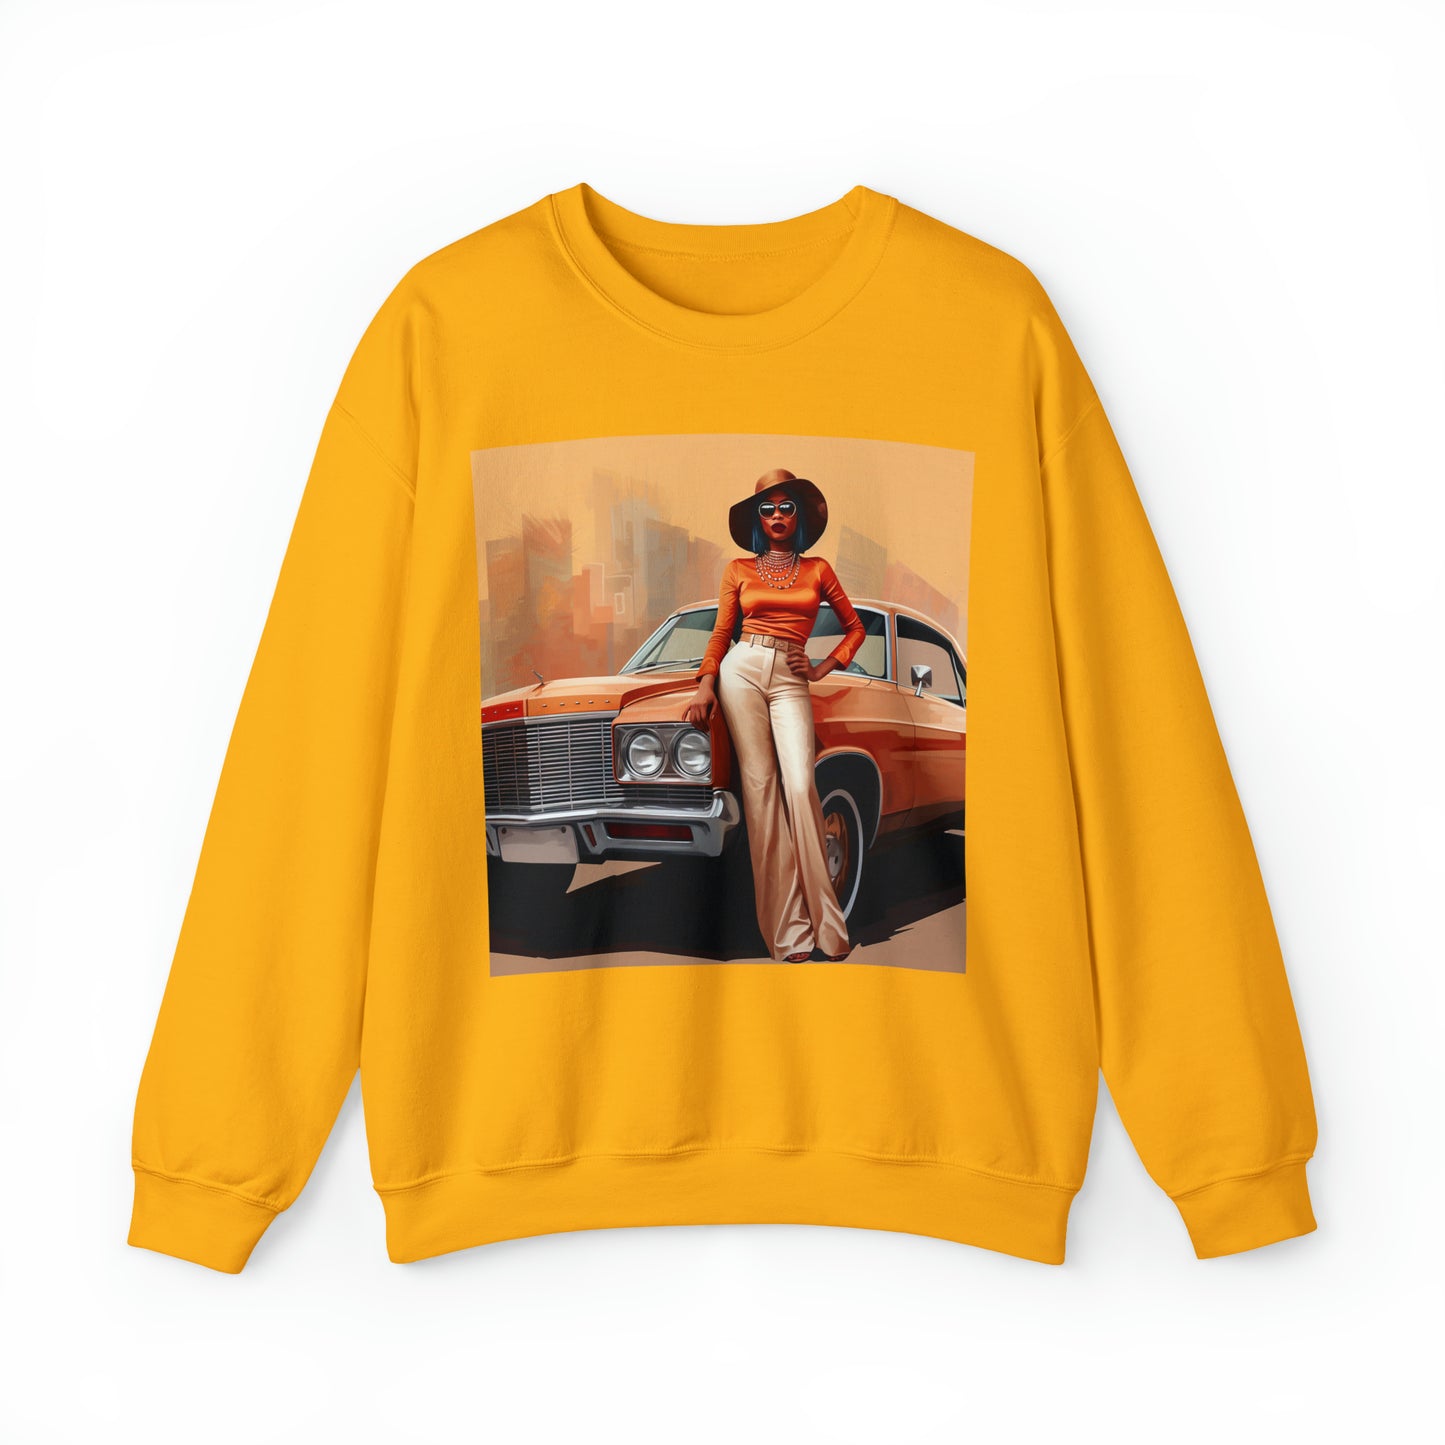 Classic Woman 70s Sweatshirt